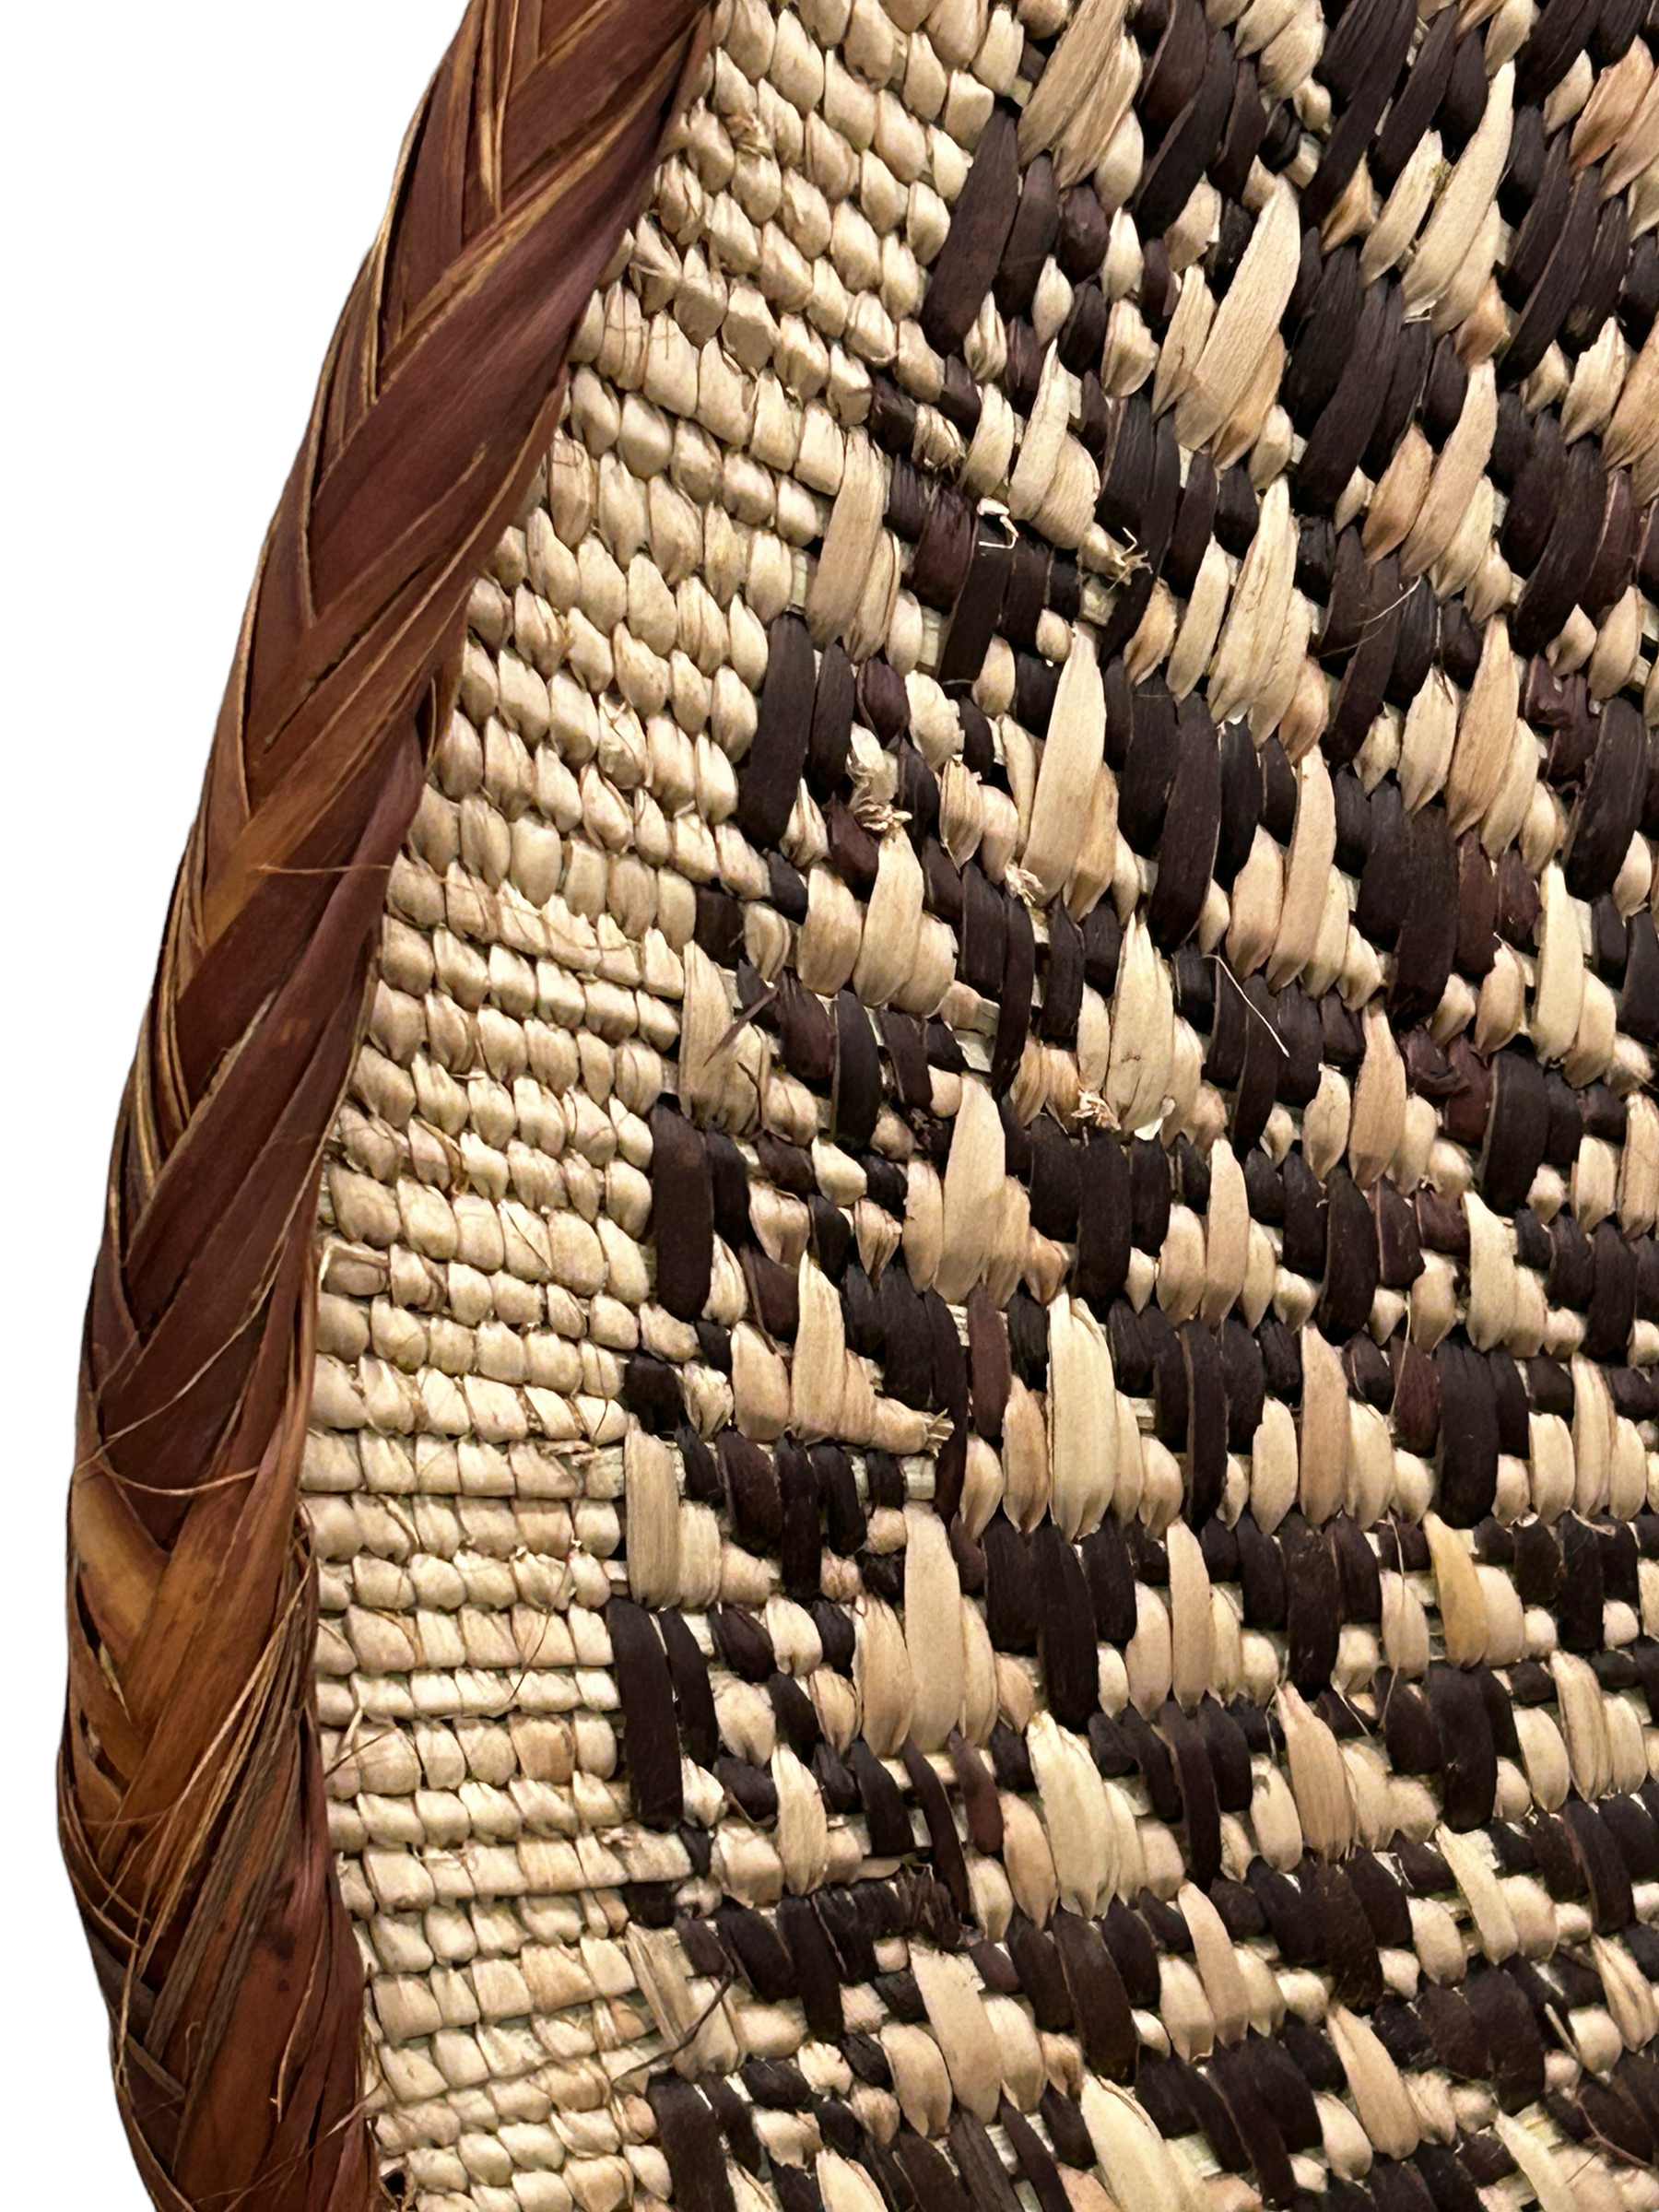 Tonga Basket Natural (47-01)